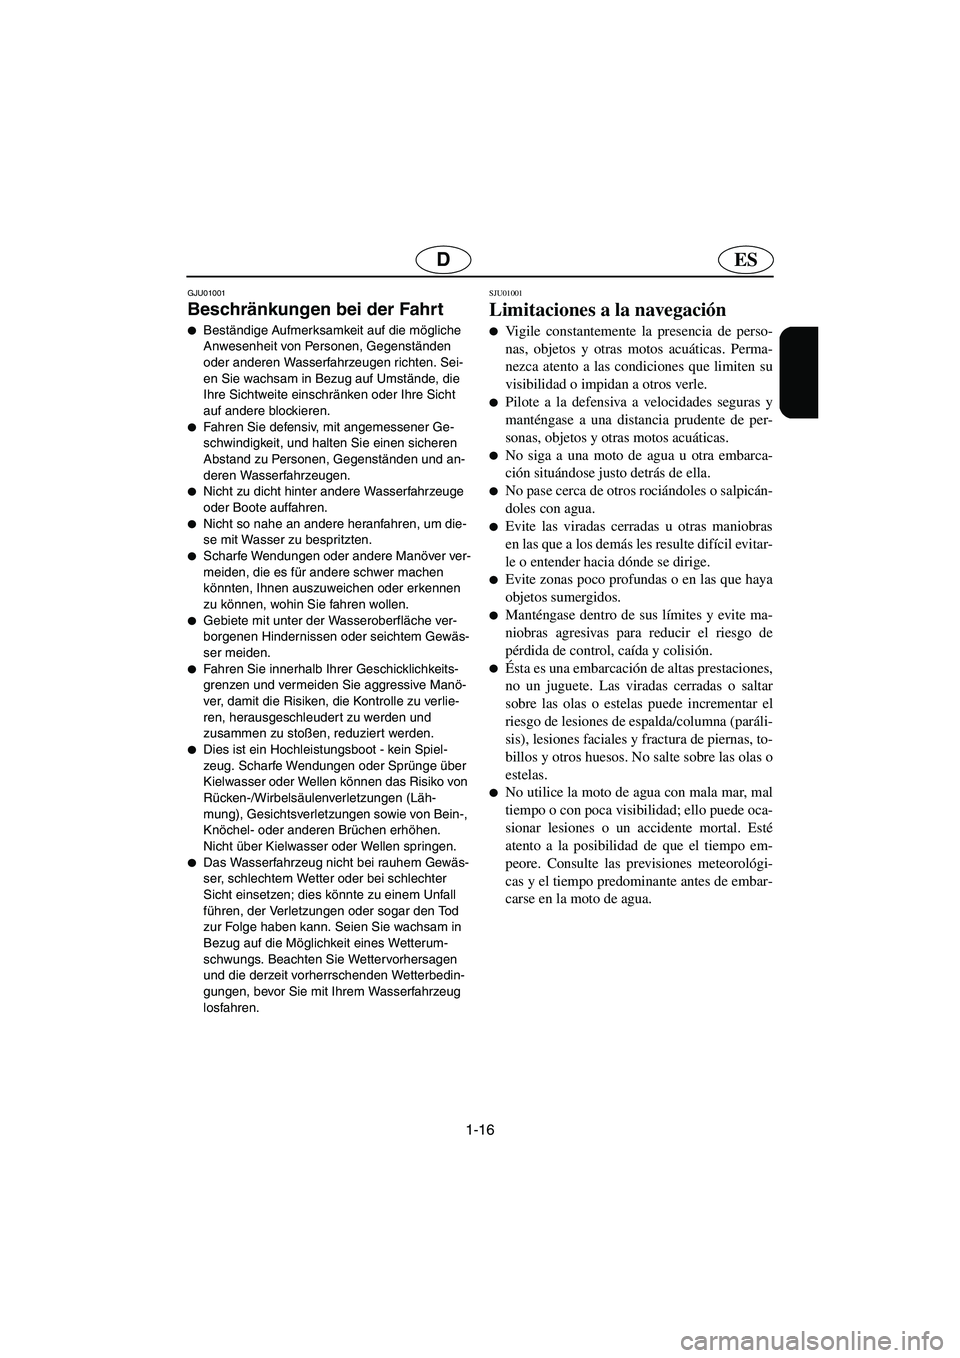 YAMAHA XL 700 2005  Manuale de Empleo (in Spanish) 1-16
ESD
GJU01001 
Beschränkungen bei der Fahrt  
Beständige Aufmerksamkeit auf die mögliche 
Anwesenheit von Personen, Gegenständen 
oder anderen Wasserfahrzeugen richten. Sei-
en Sie wachsam in